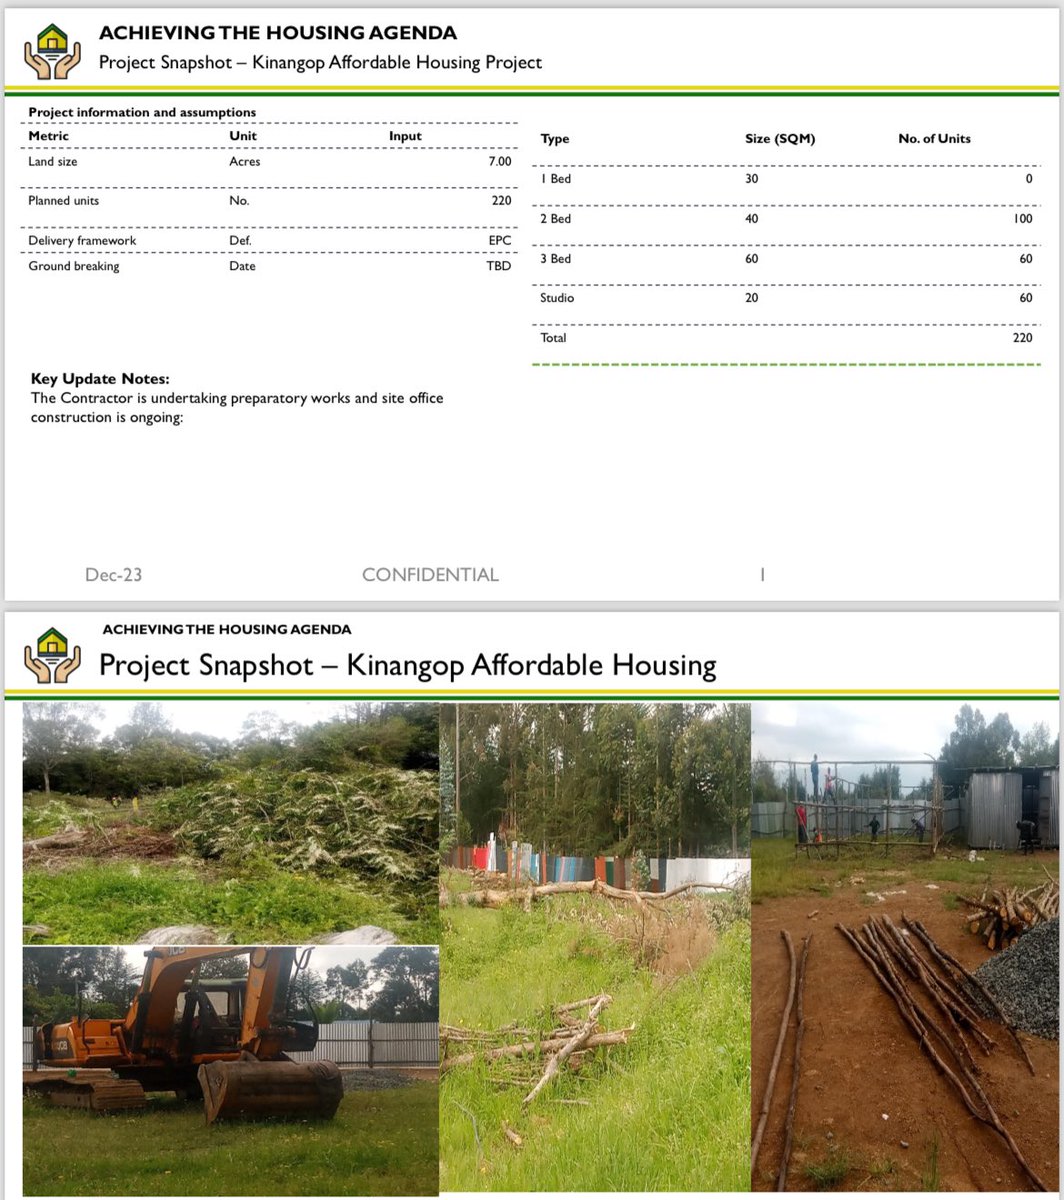 Kinangop AHP Project -Nyandarua. Register to be a home owner, *832# Boma Yangu